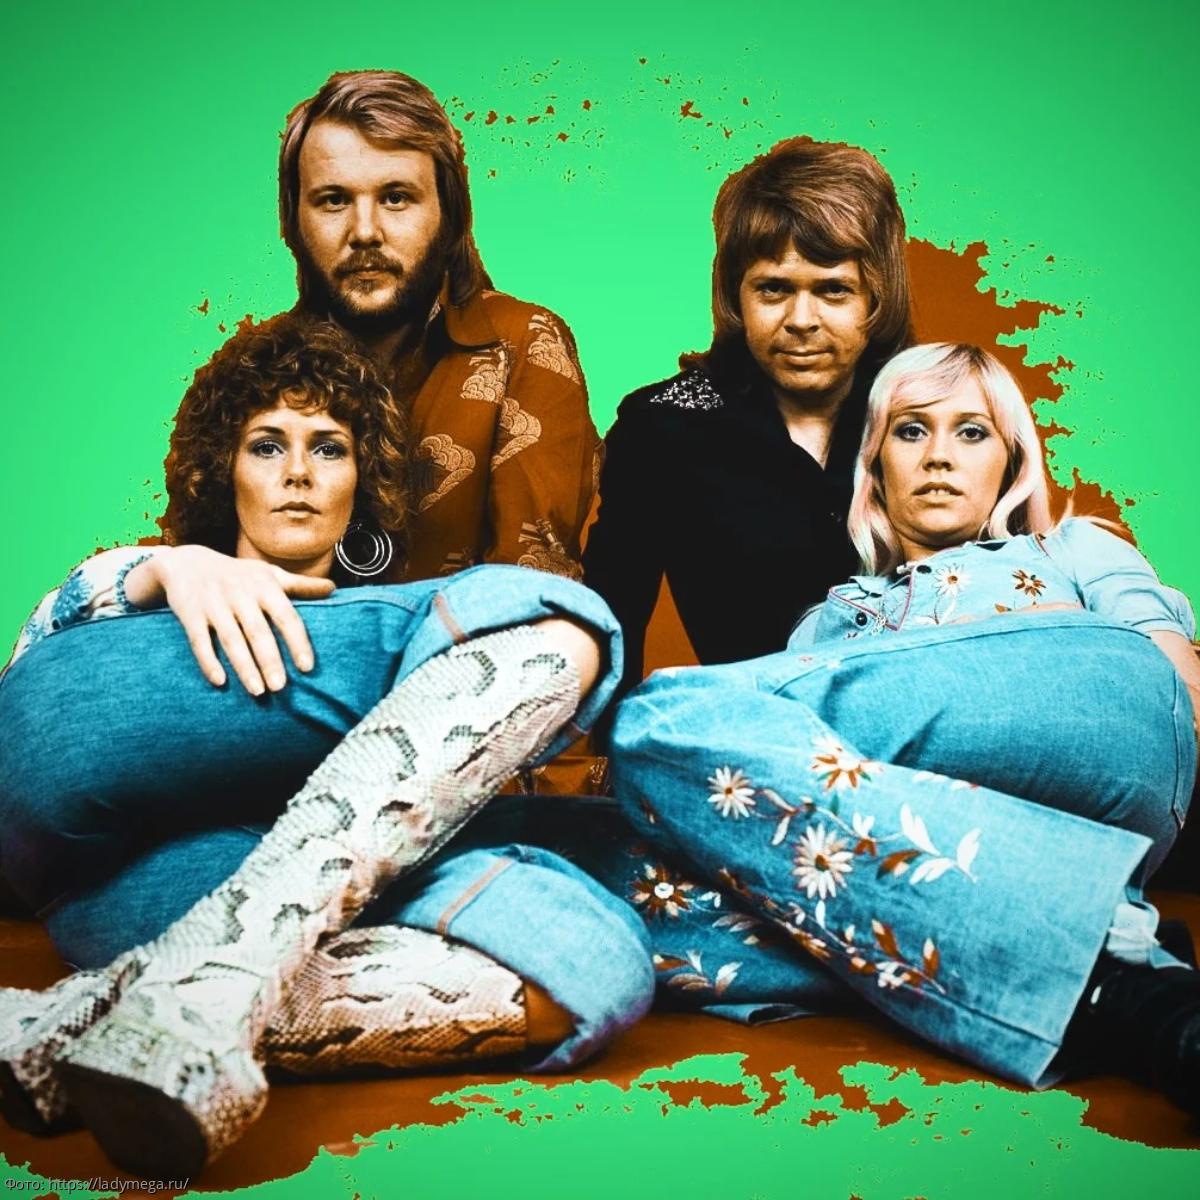 Абба мп3. Группа ABBA. Солисты группы ABBA. Группа ABBA сейчас. Группа ABBA Швеция.